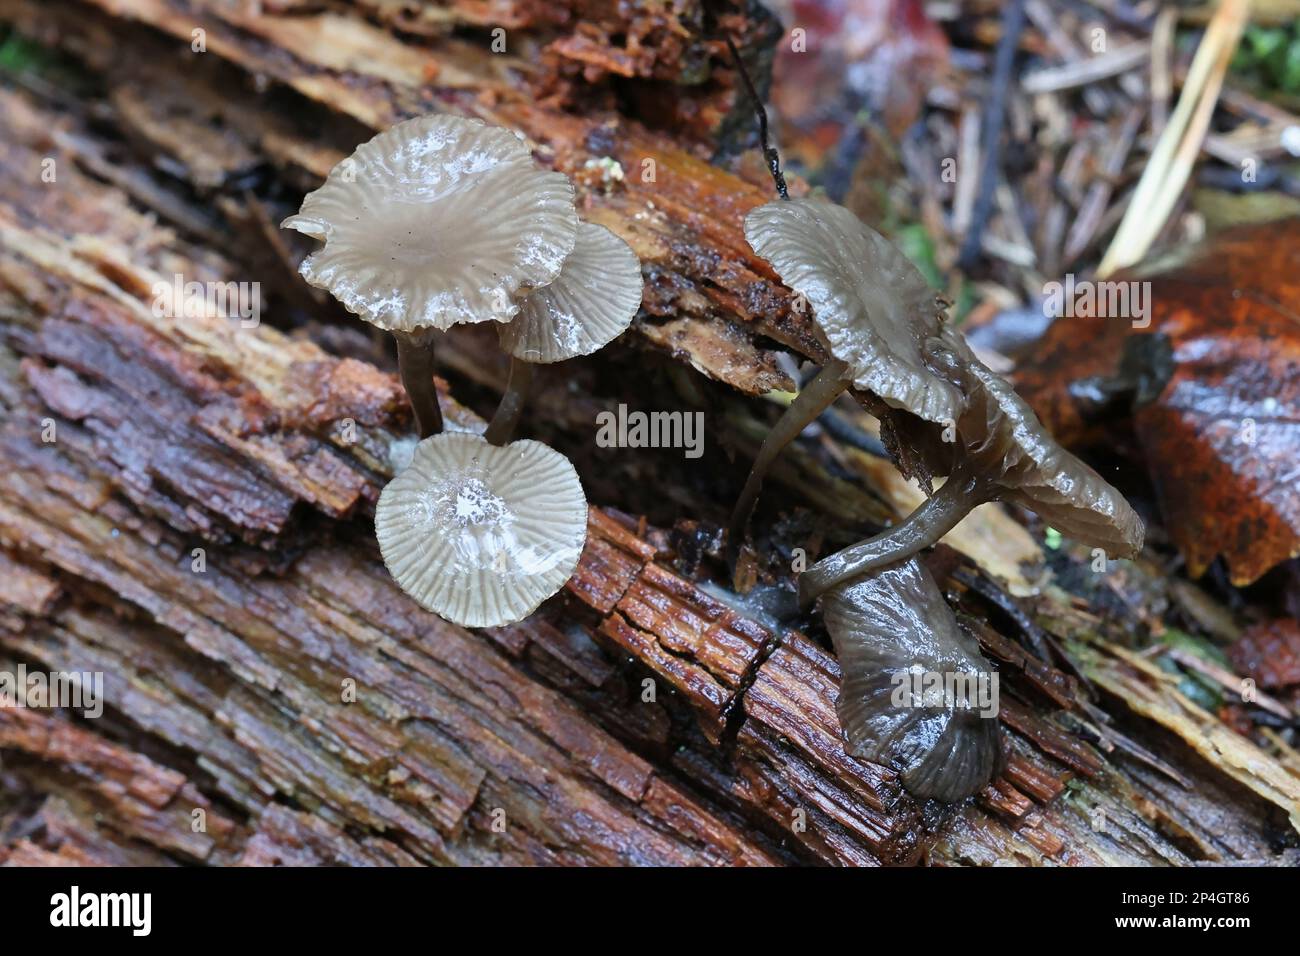 Arrhenia epichysium, small grey mushroom growing on spruce log in Finland, no common English name Stock Photo